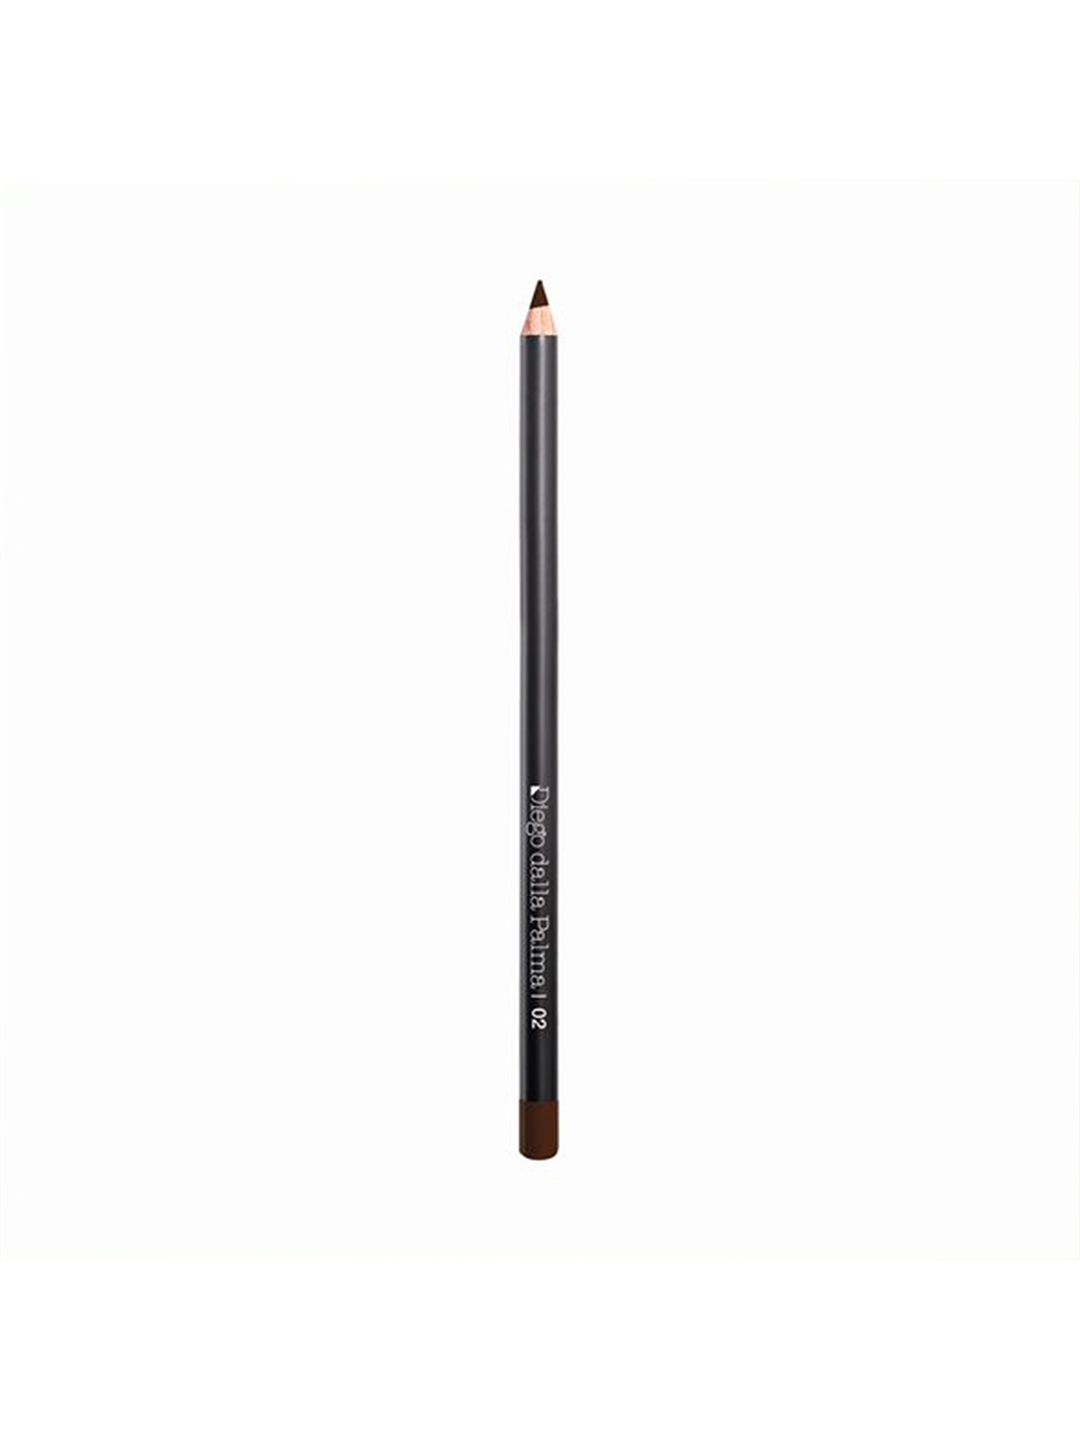 Diego dalla Palma MILANO Eye Pencil - Dark Brown 02 Price in India